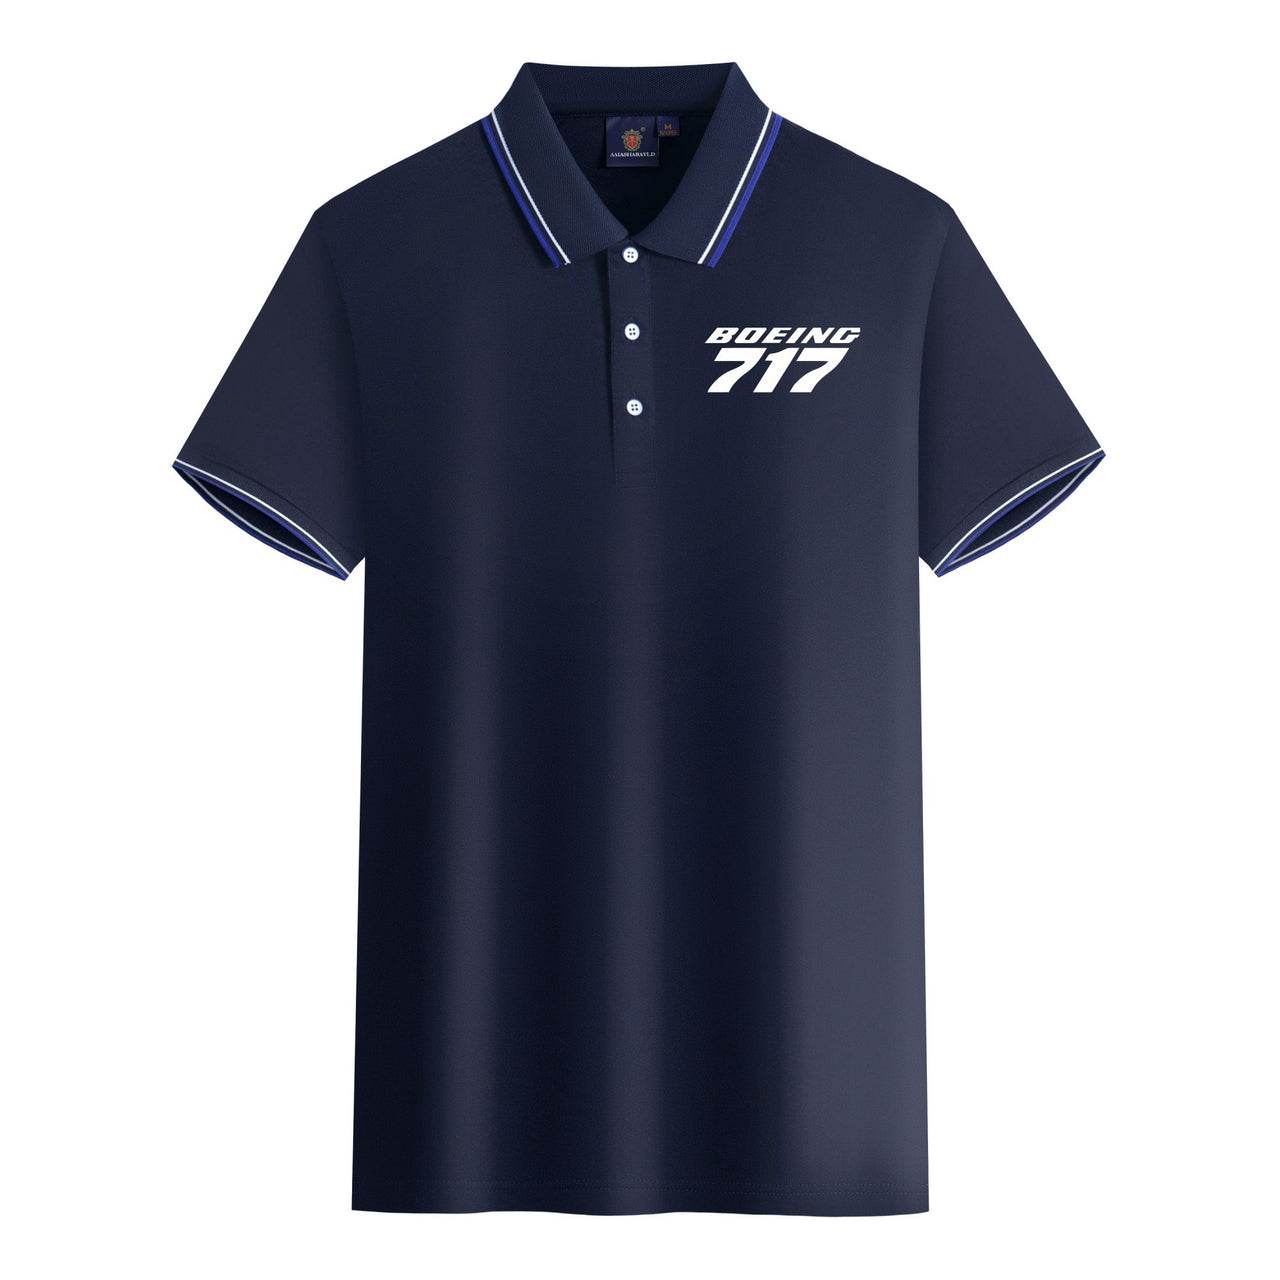 Boeing 717 & Text Designed Stylish Polo T-Shirts